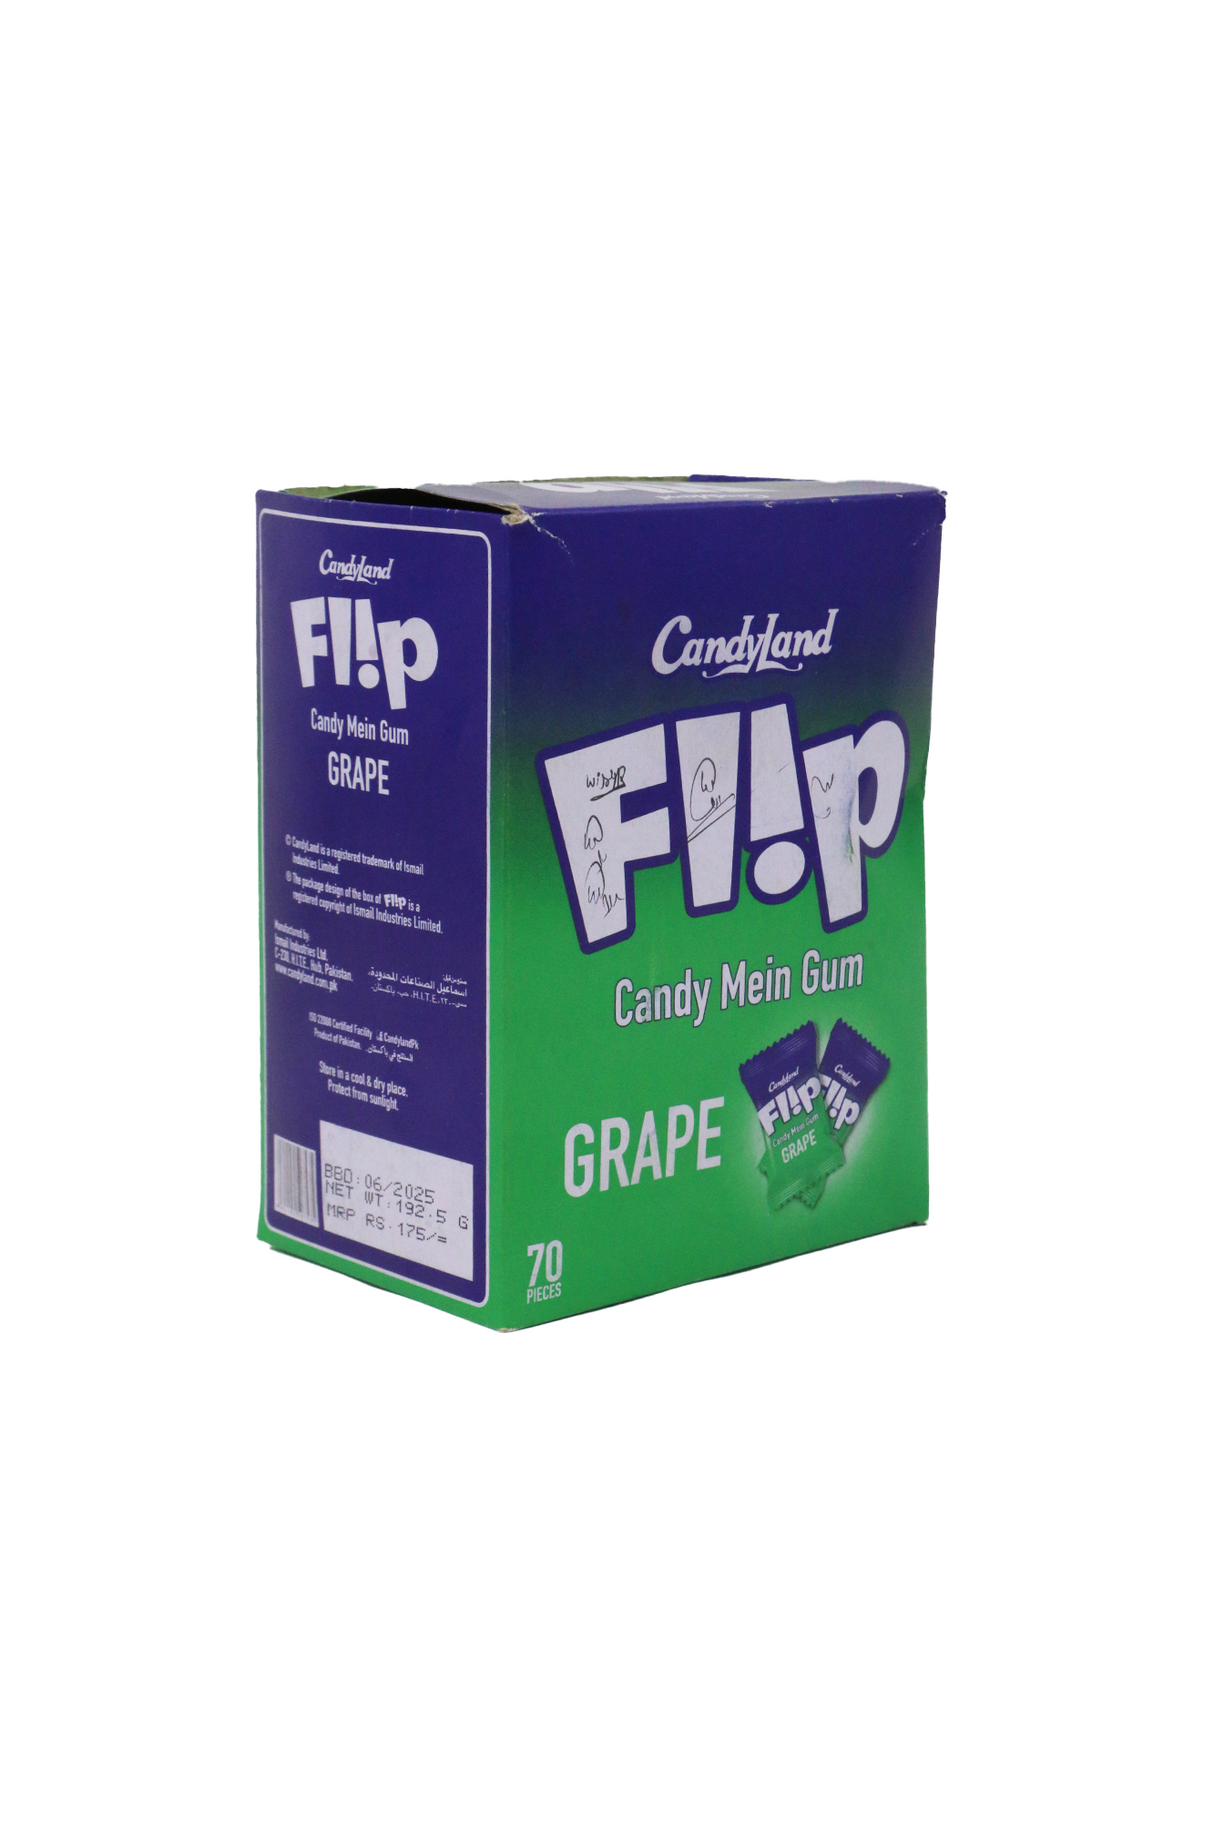 candyland candy flip grape box 70p